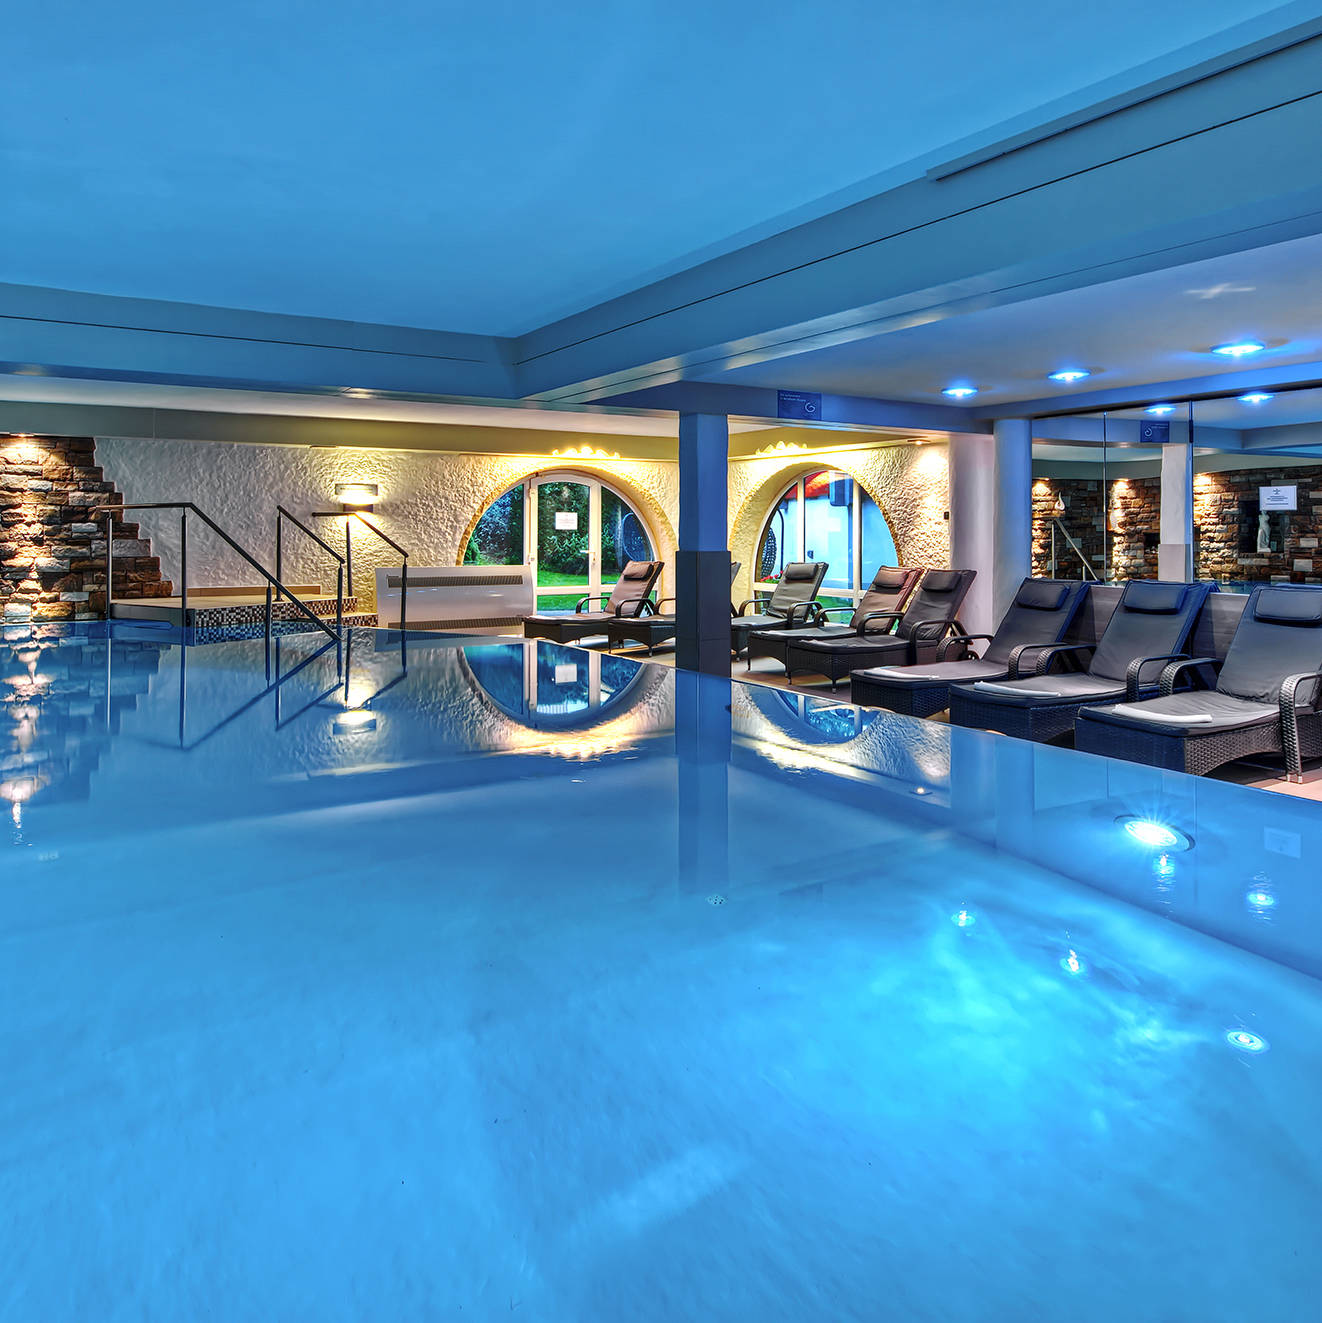 Pool - Königshof Hotel-Resort Oberstaufen - Official website